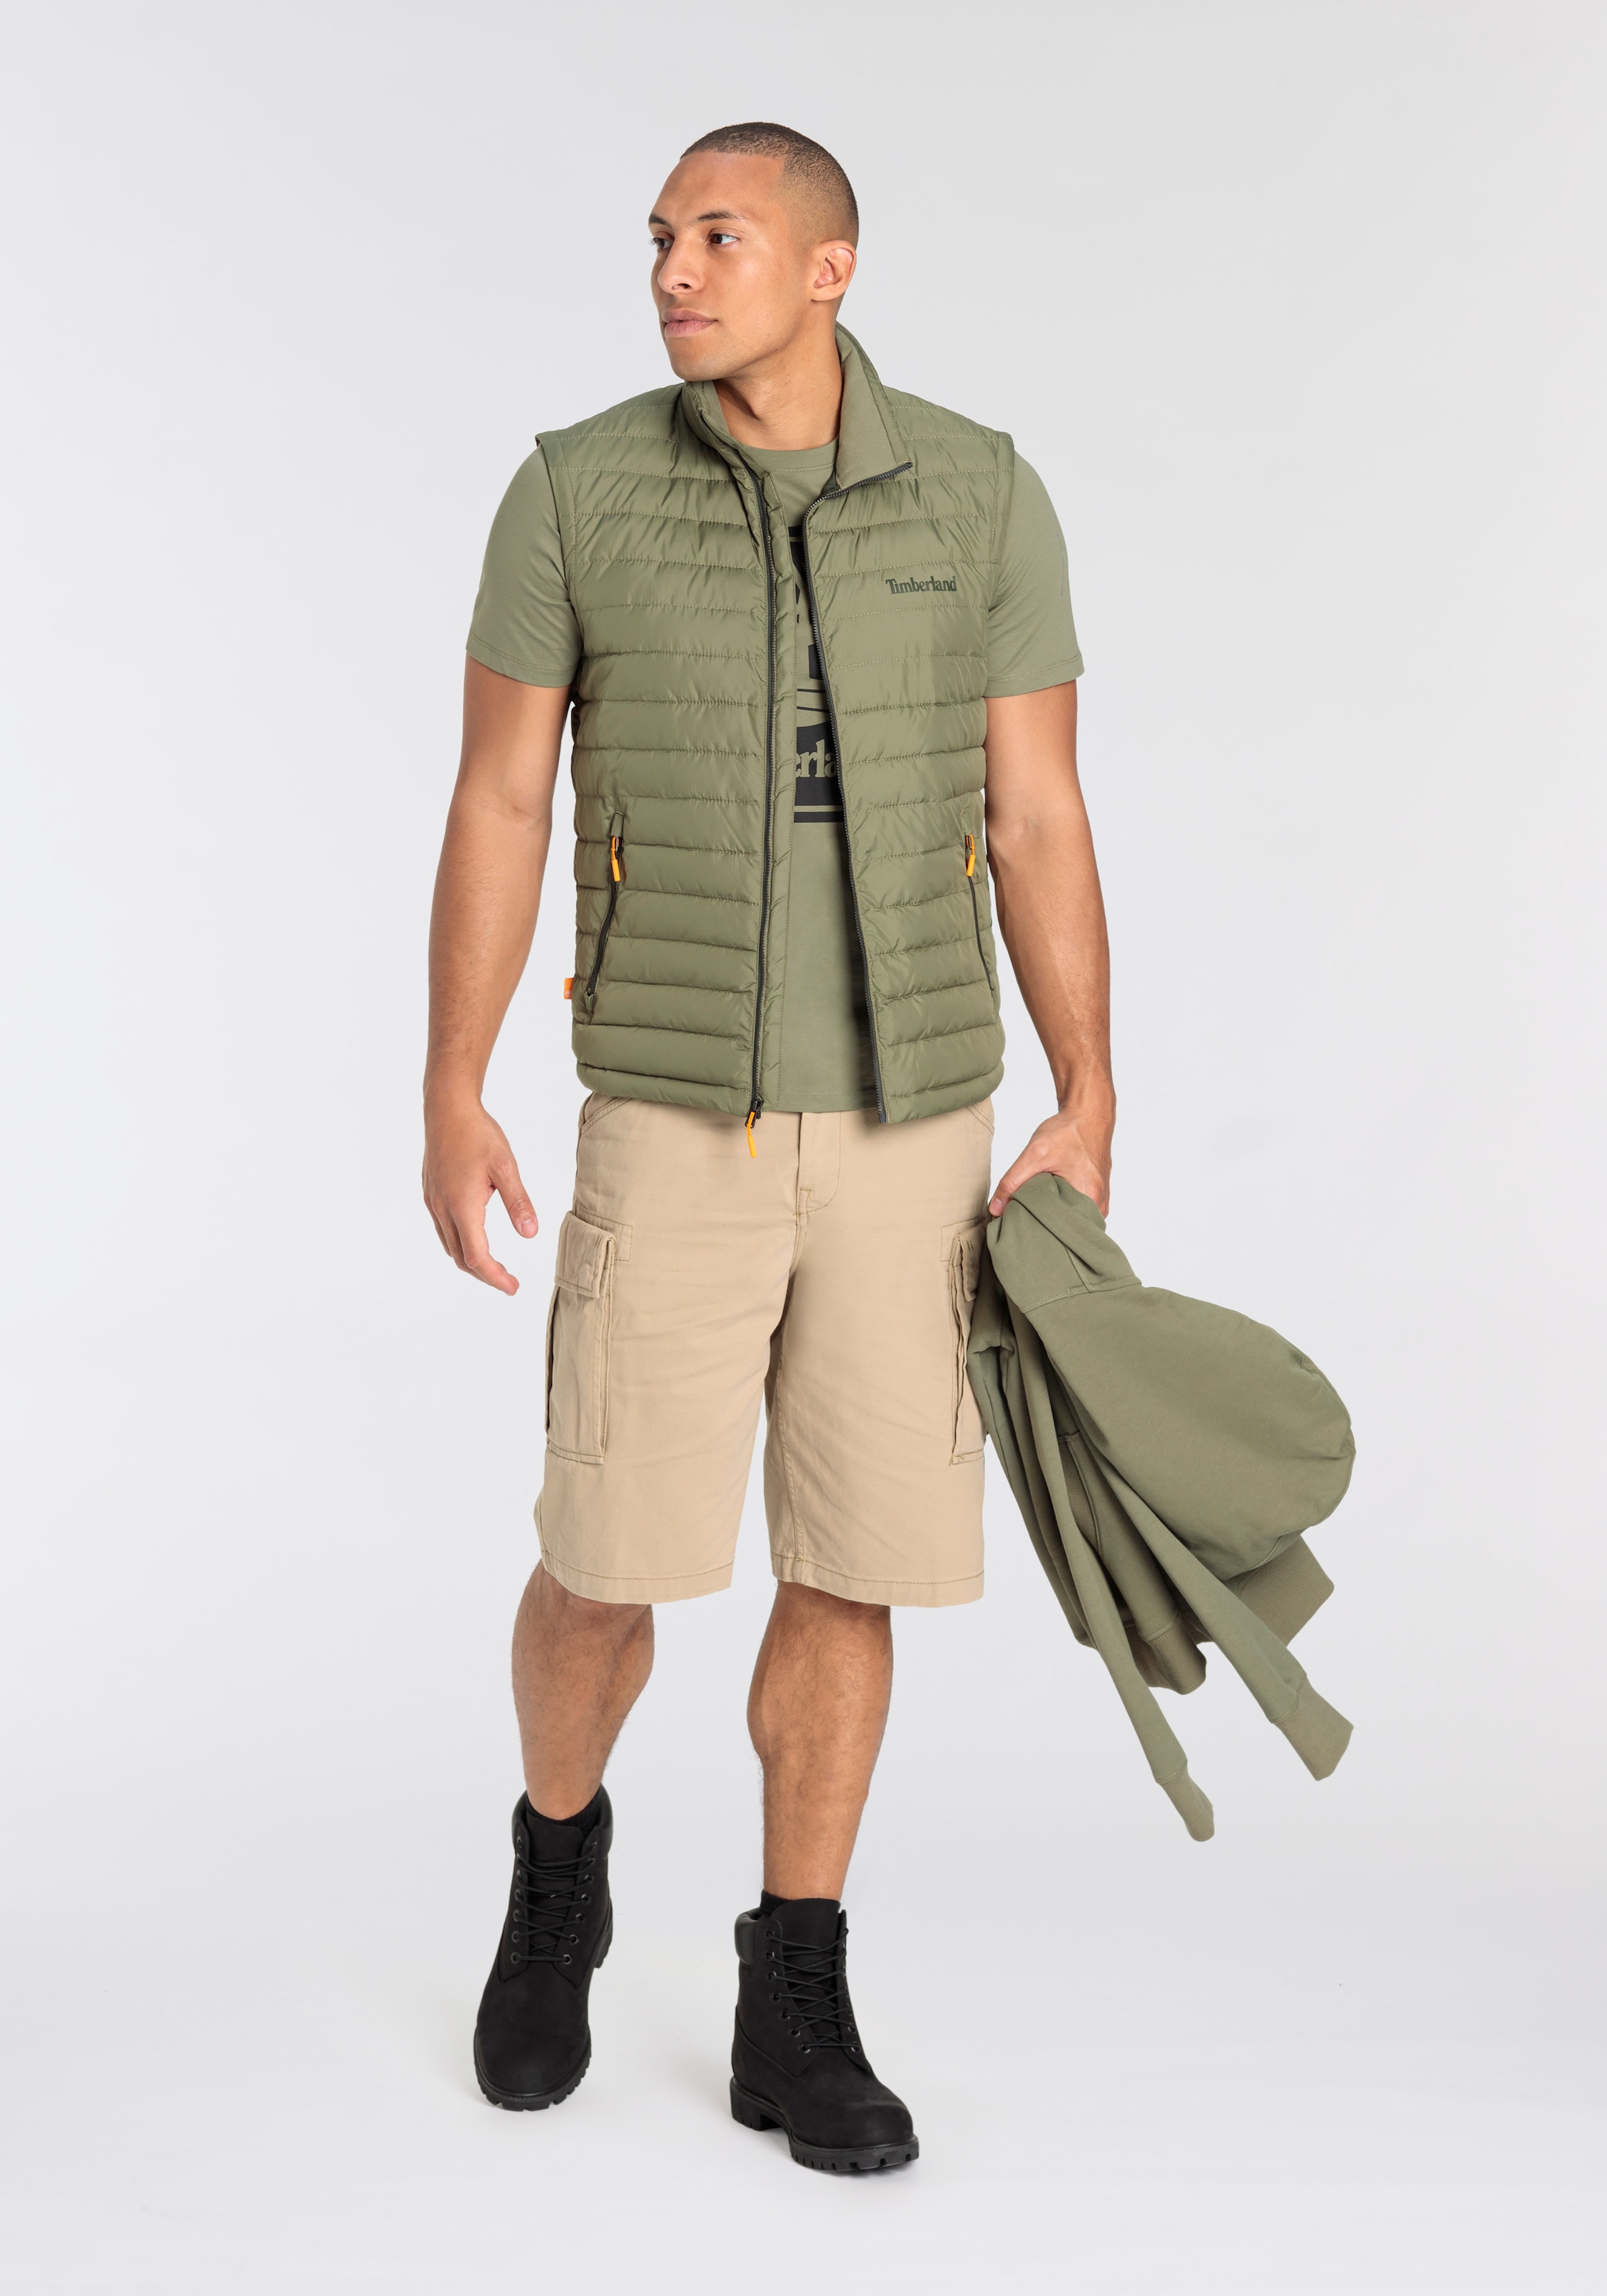 Timberland T-Shirt »STACK LOGO Short Sleeve Tee«